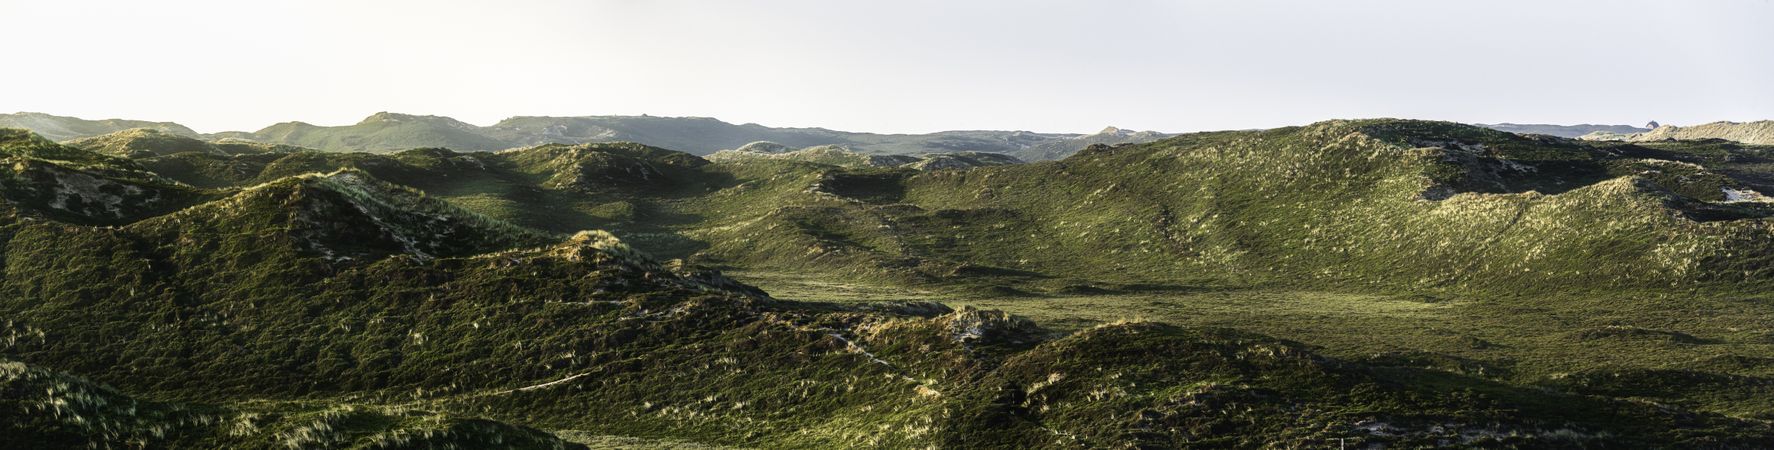 Landscape of Sylt island